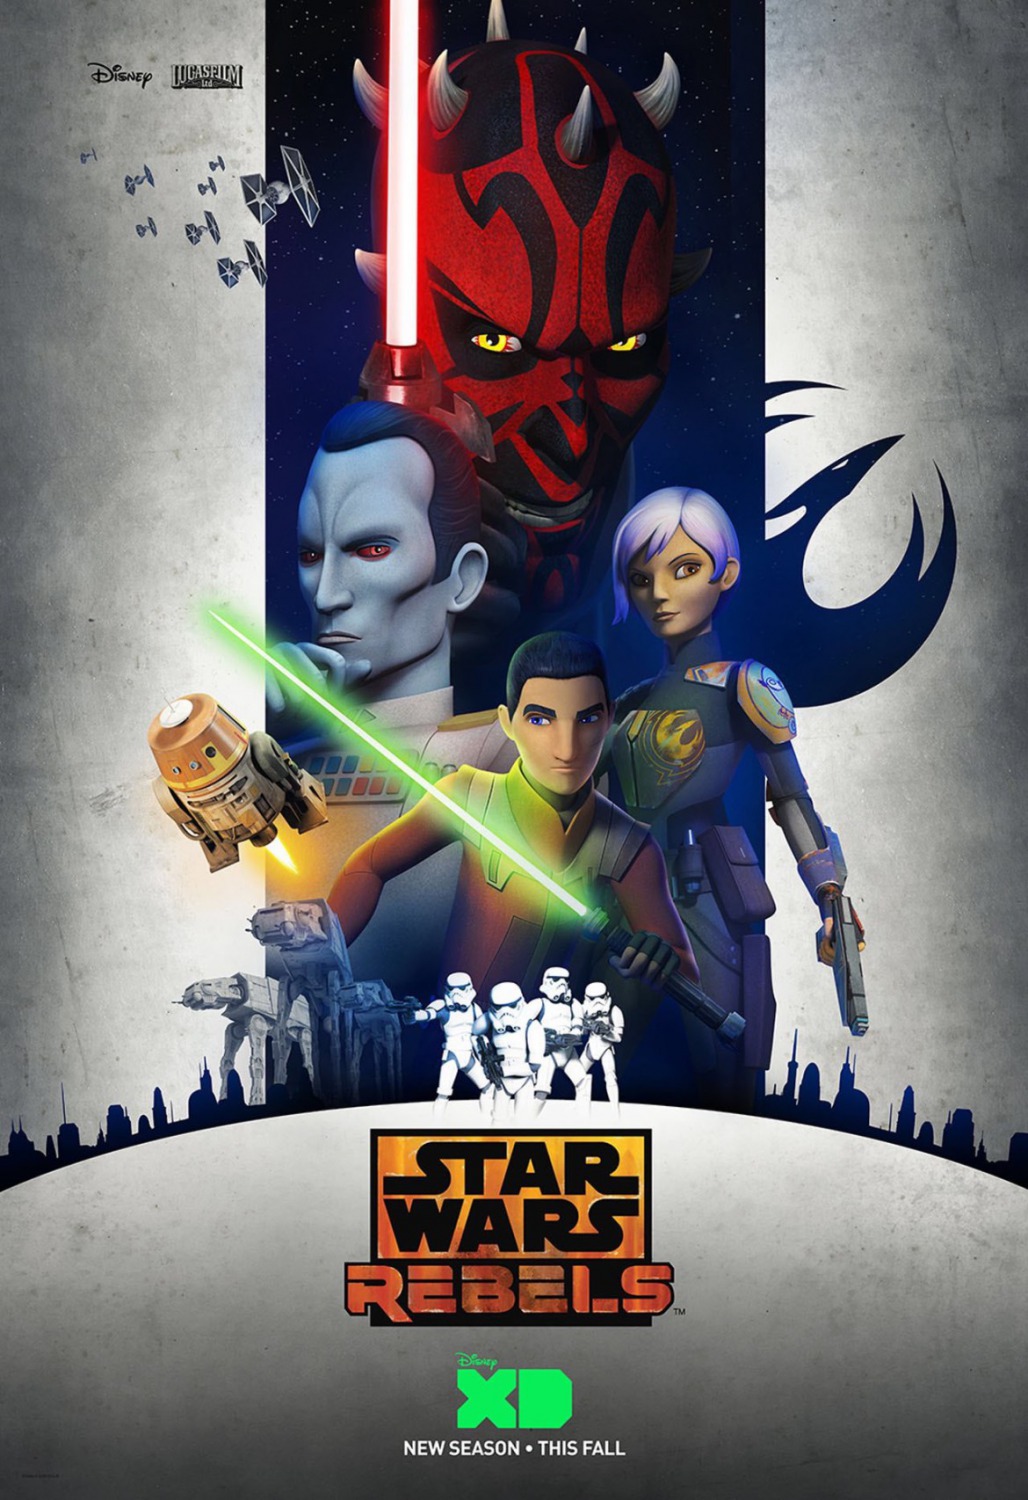 Extra Large TV Poster Image for Star Wars Rebels (#5 of 7)